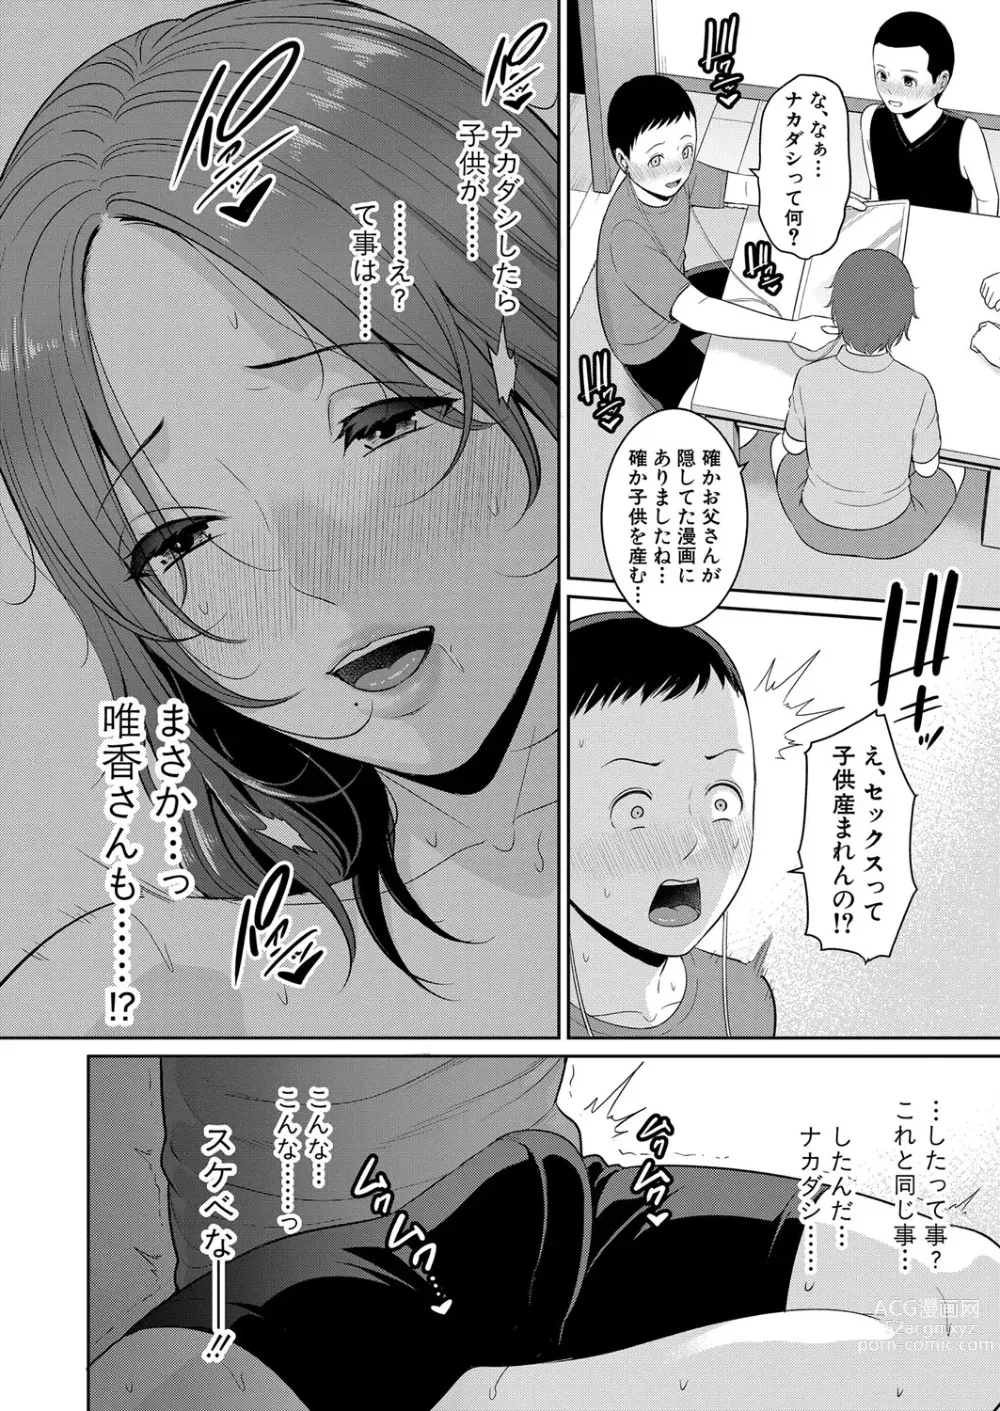 Page 8 of manga Shin Tomodachi no Hahaoya Ch. 1-8